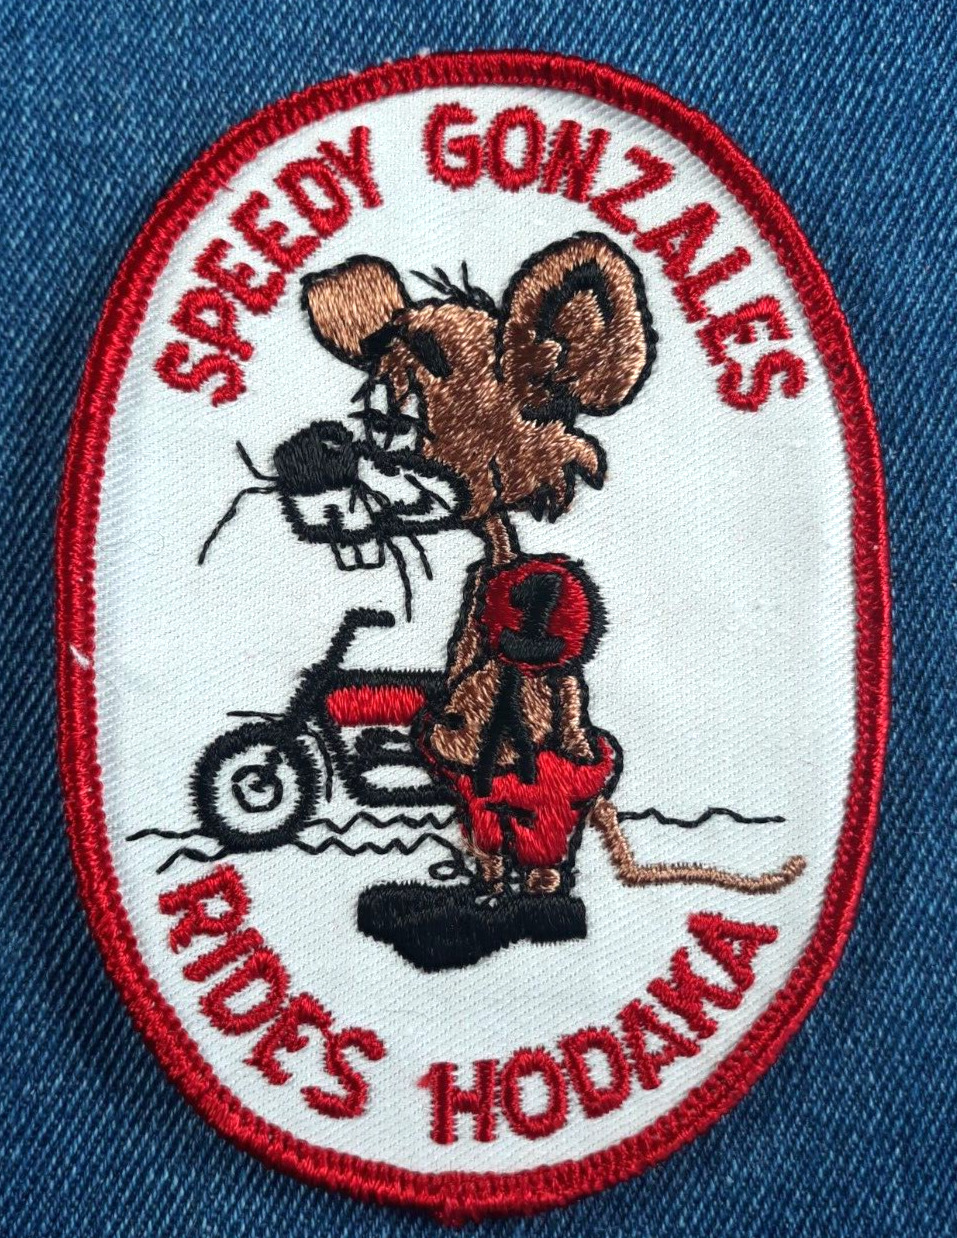 NOS Vintage Speedy Gonzales Rides Hodaka Patch Motorcycle Drit Trail Bike Racing